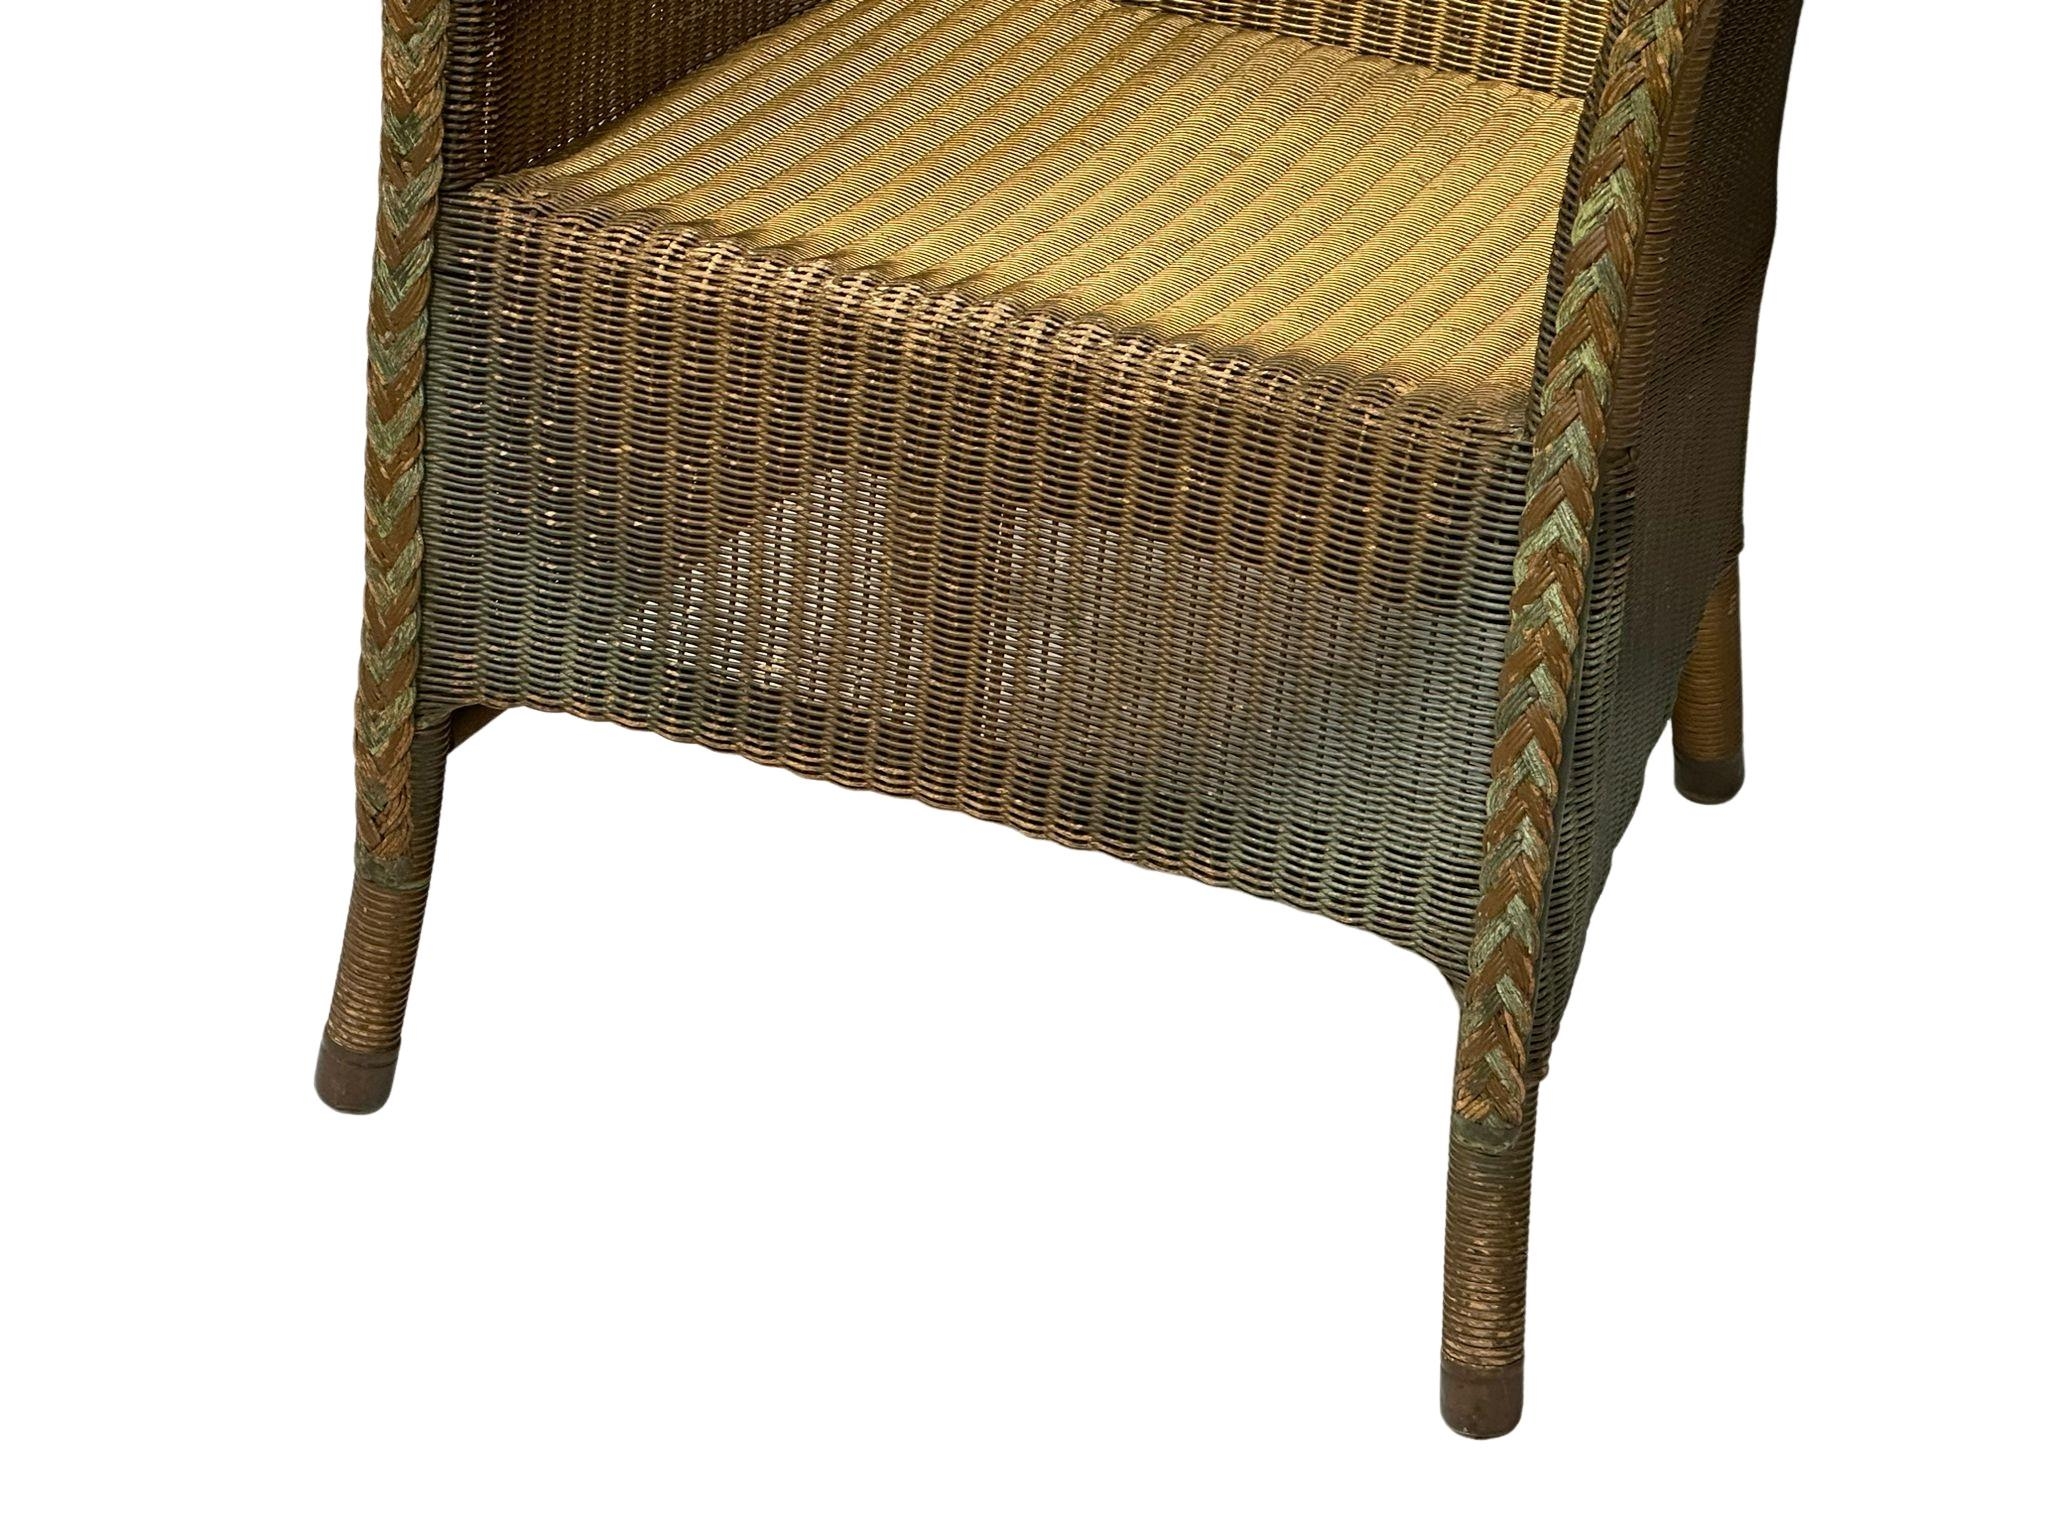 A 1930’s Lloyd Loom wicker chair. - Image 3 of 5